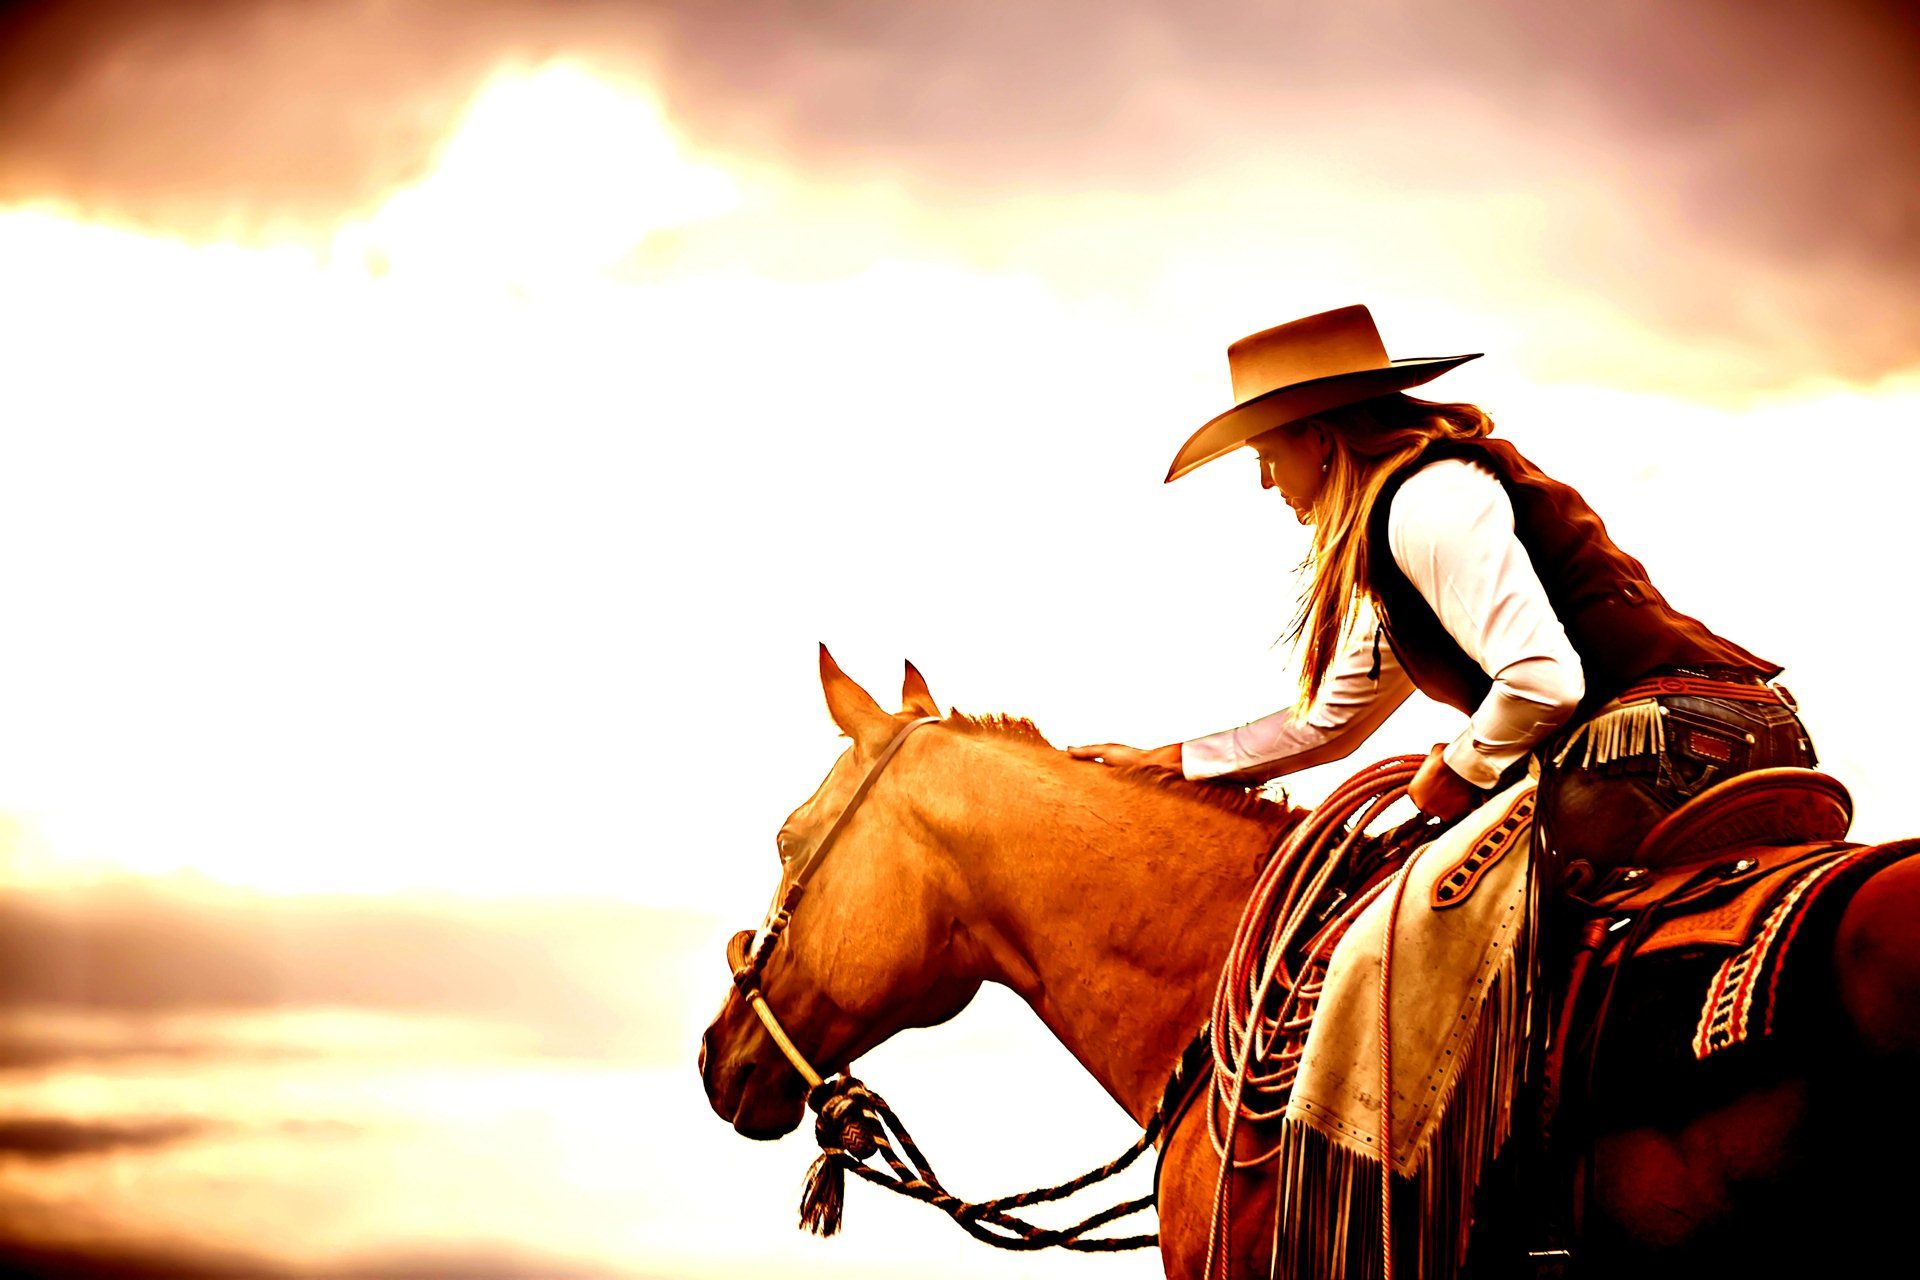 Horseback Riding Desktop Background. Horseback Riding Wallpaper, Zorro Horseback Wallpaper and Horseback Riding Background Inspiration